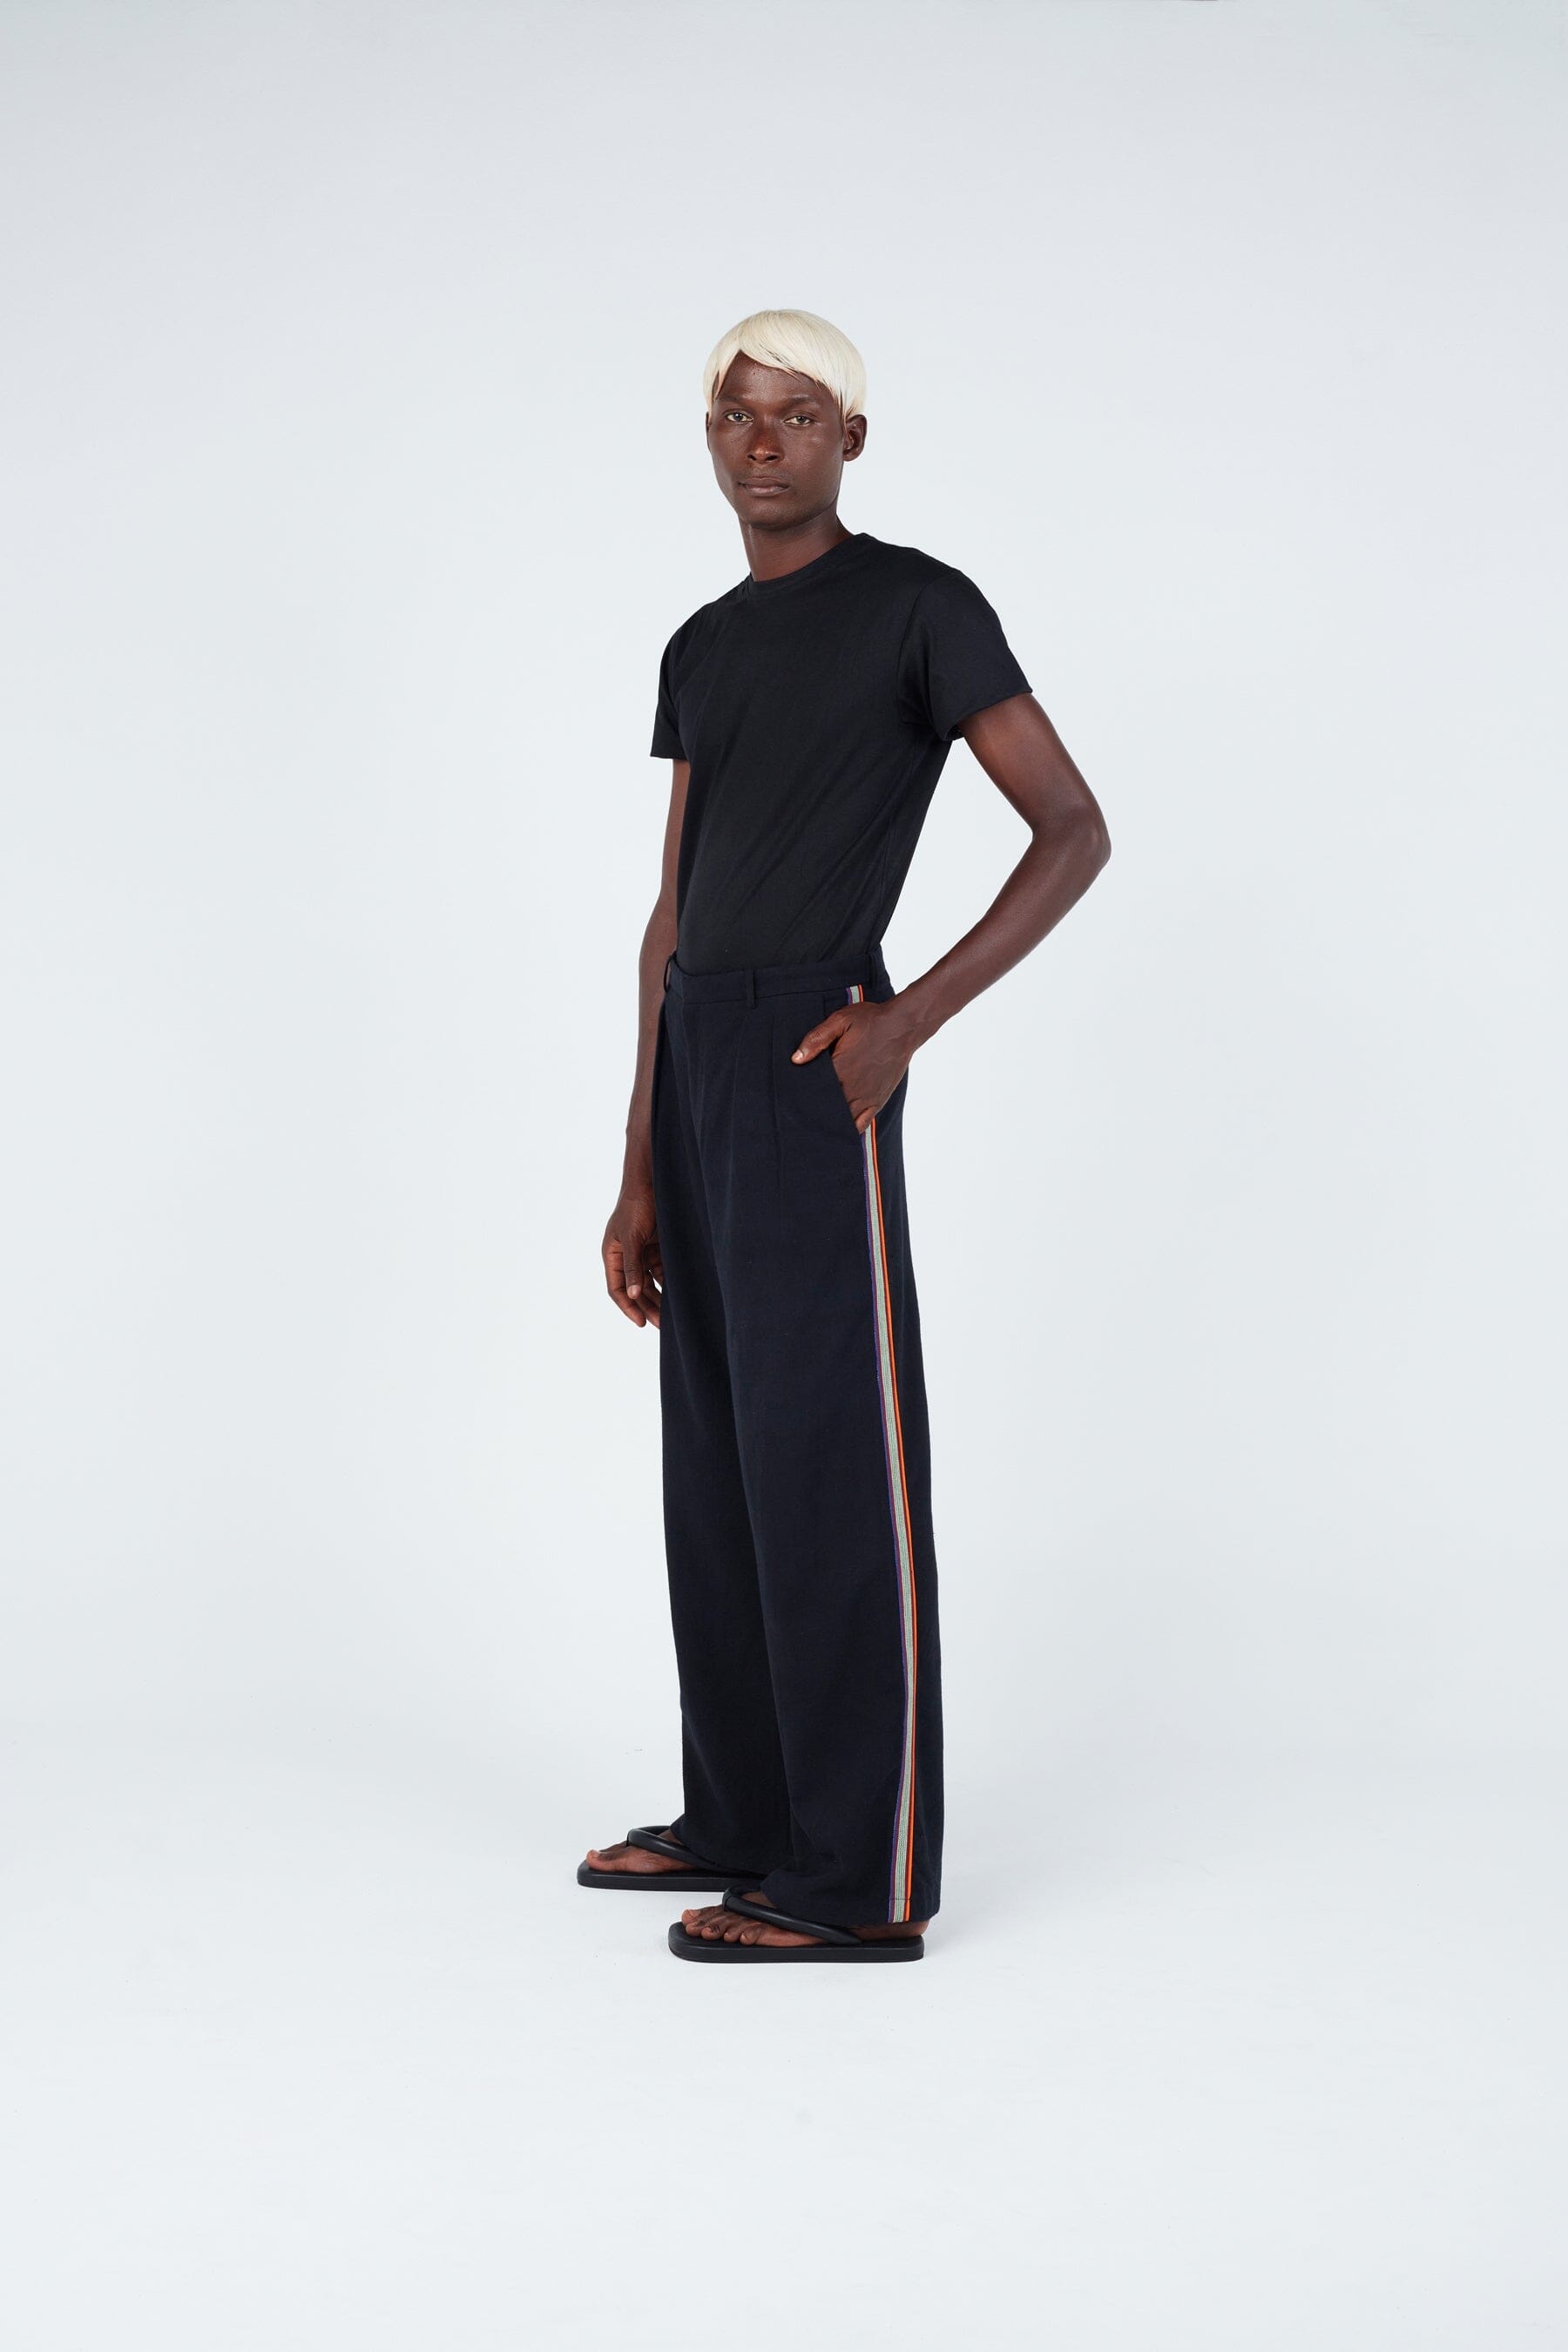 Stripe Seam Classic Wide Pants • Black Trousers New LaurenceAirline 